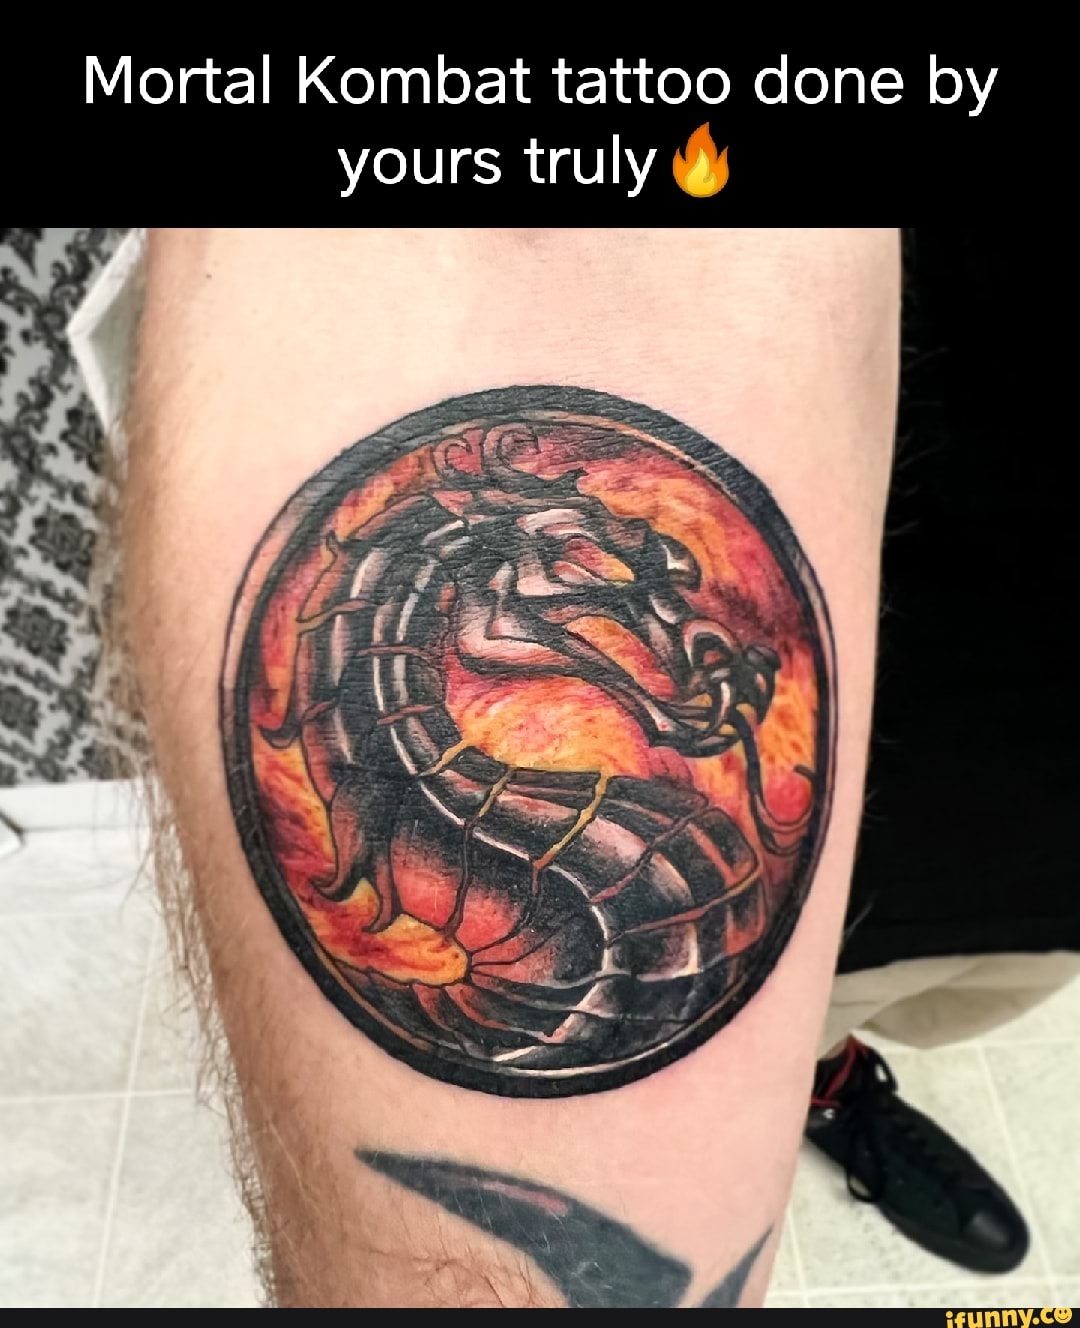 My Mortal Kombat Tattoo by TrilbyMonkey on DeviantArt